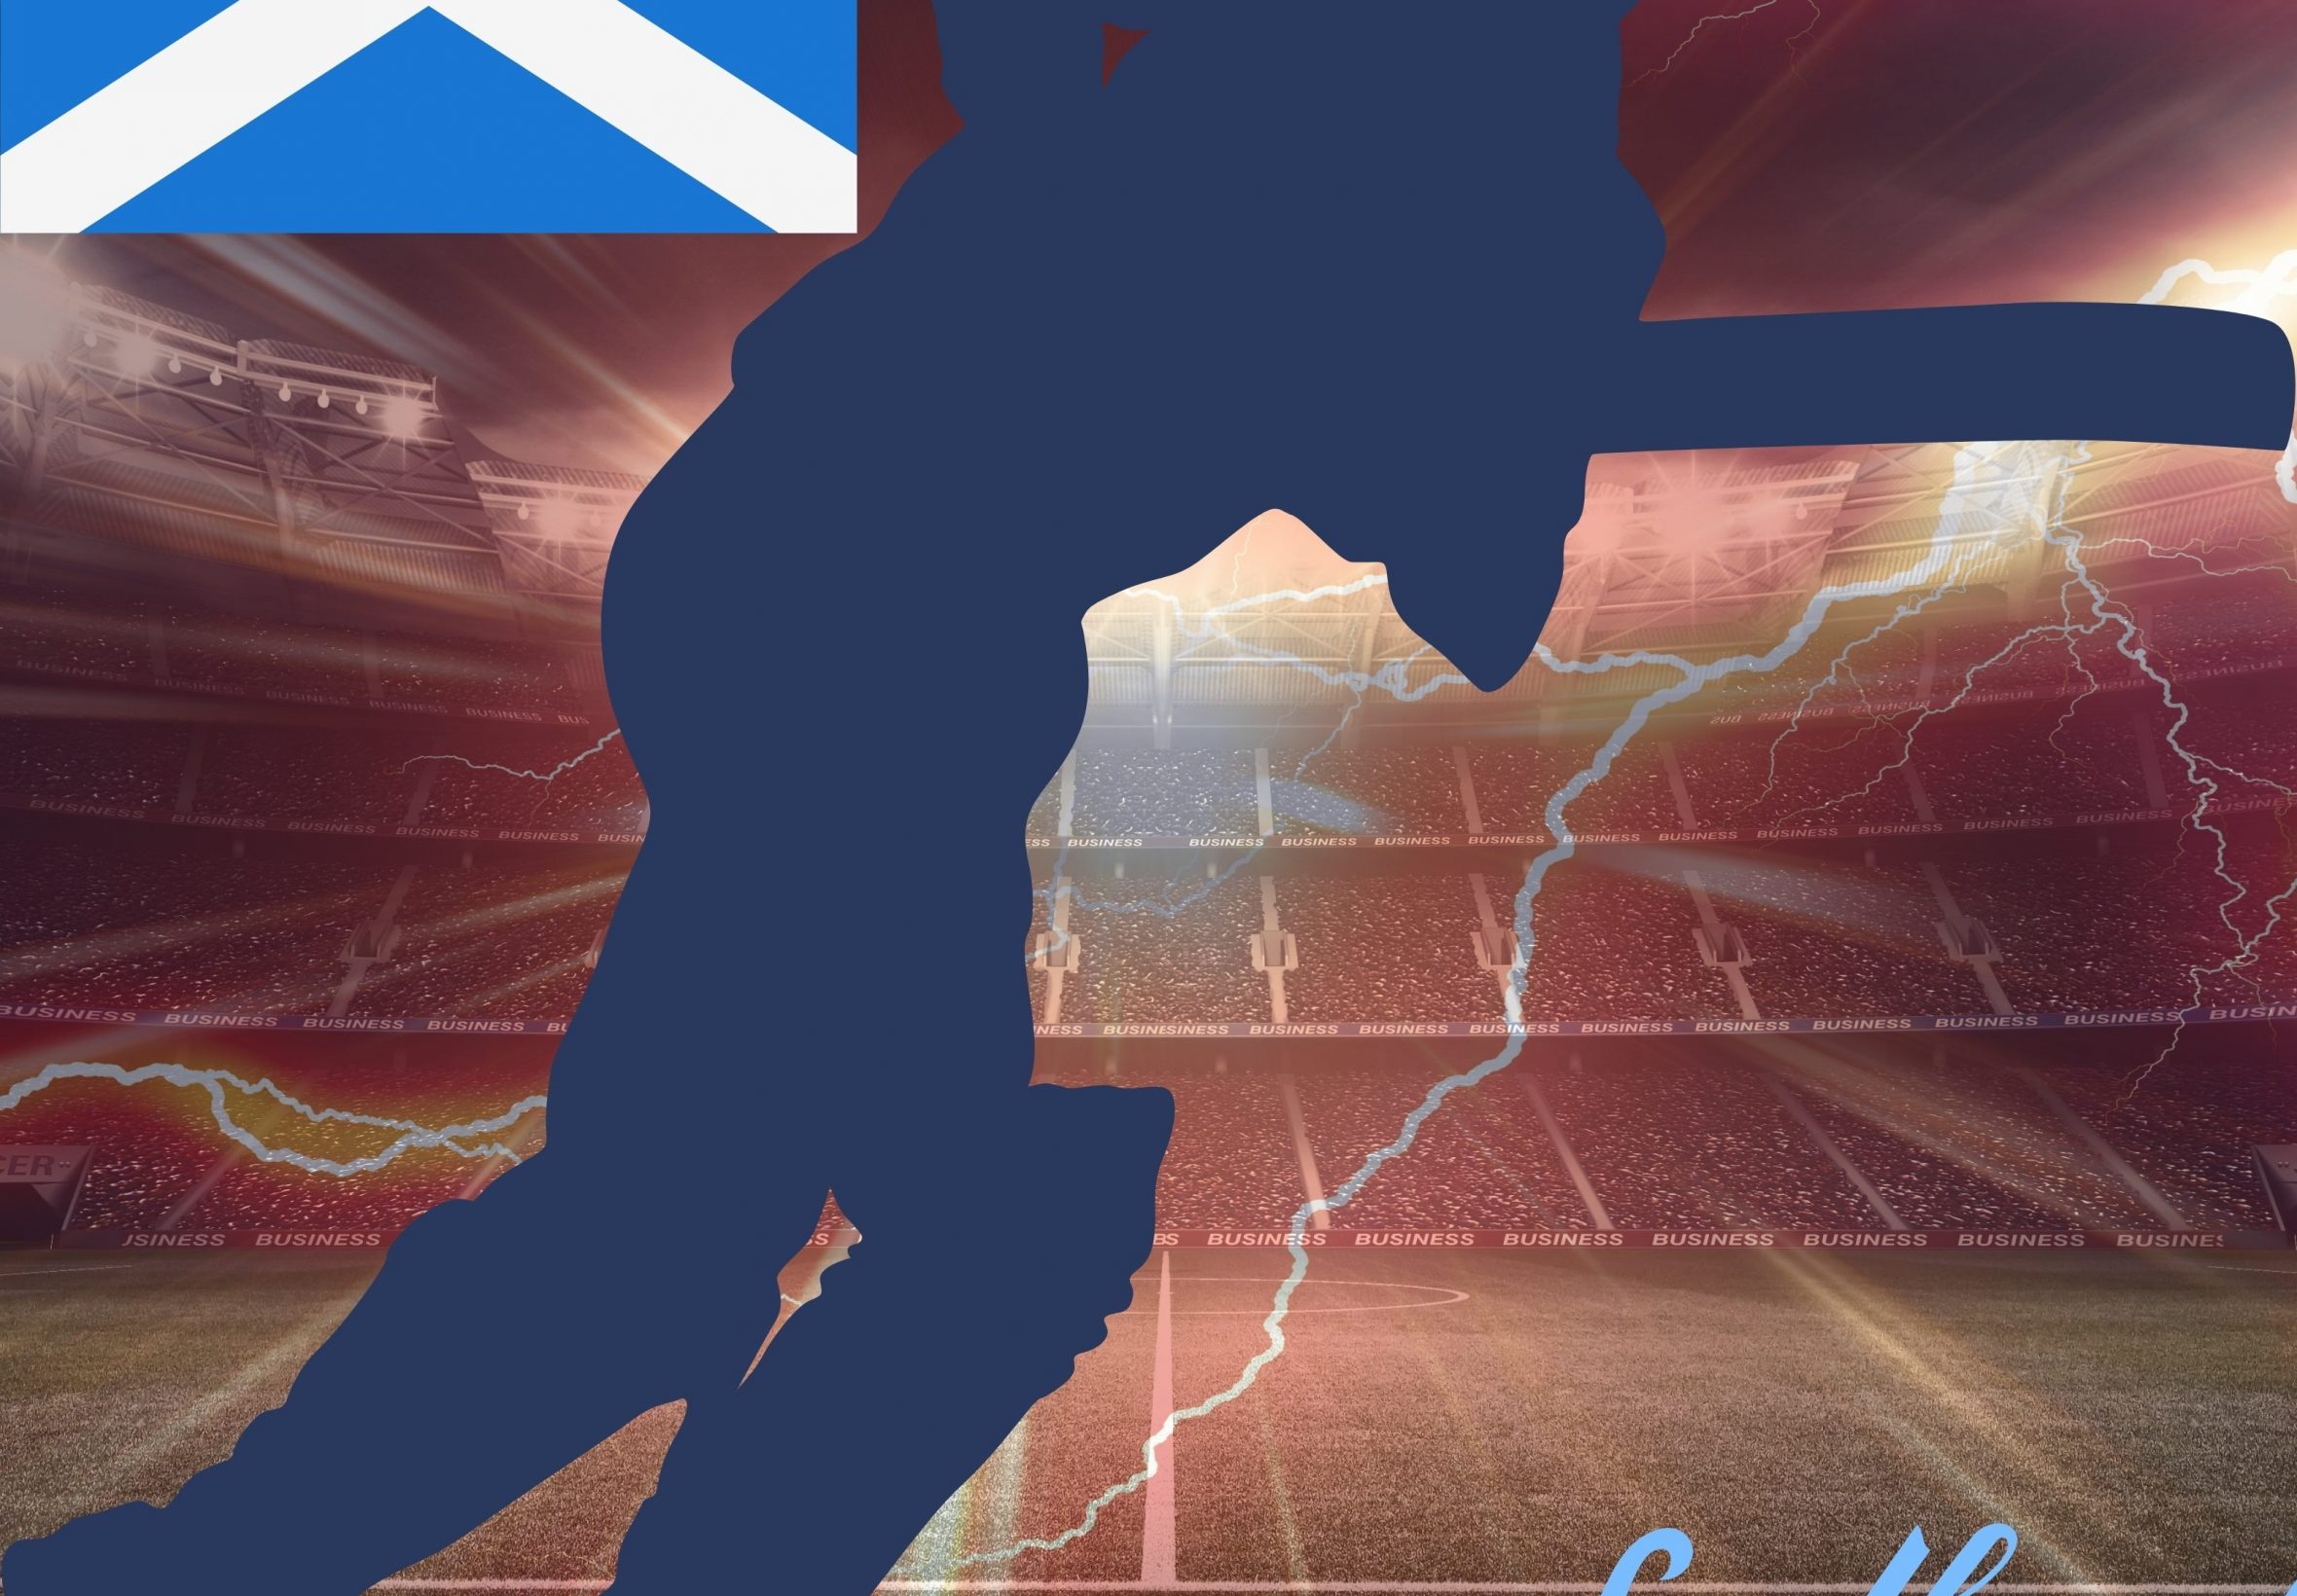 2360x1640 iPad Air wallpaper 4k Scotland Cricket Stadium iPad Wallpaper 2360x1640 pixels resolution